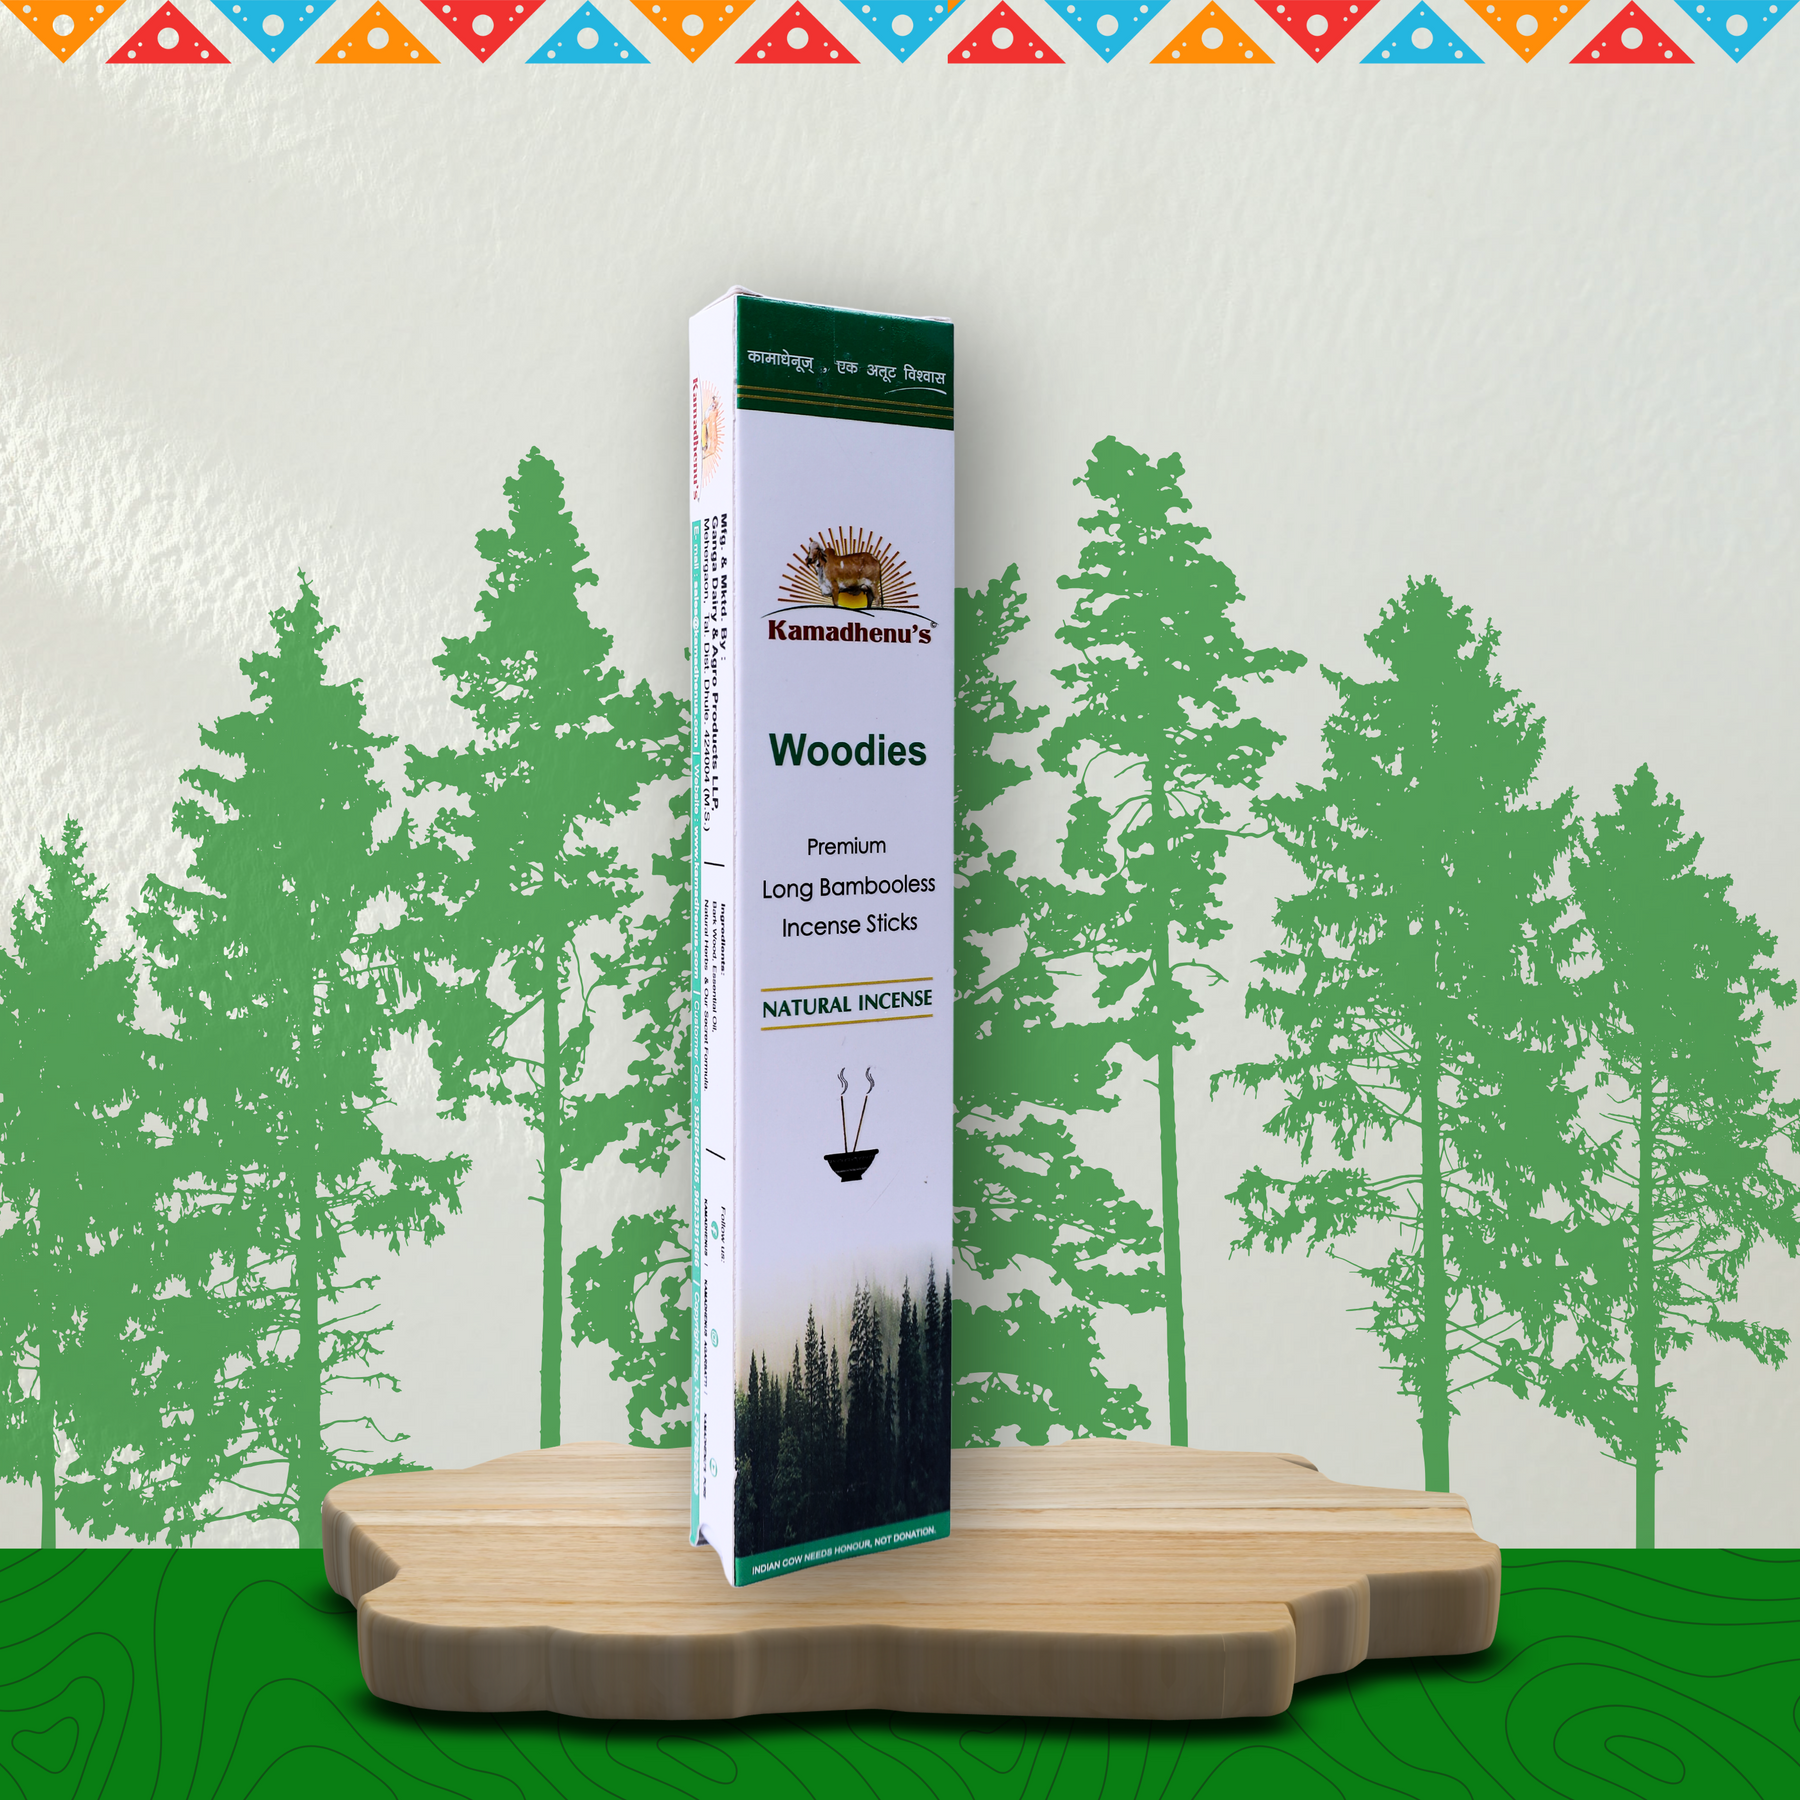 Kamadhenu's Woodies Premium Long Bambooless Incense Sticks